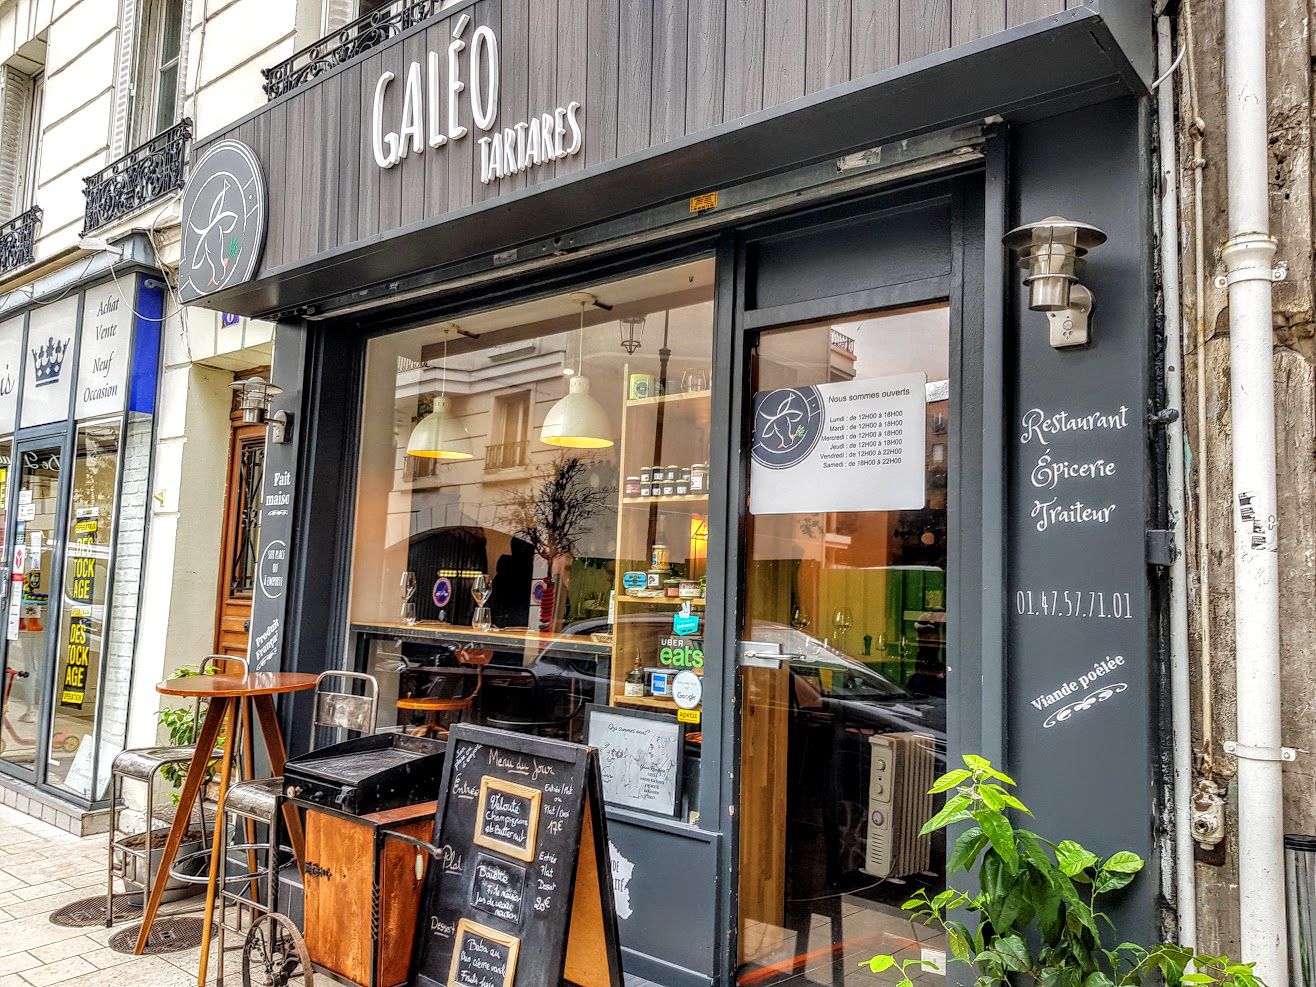 Galéo Tartares restaurant Puteaux rue Marius Jacotot